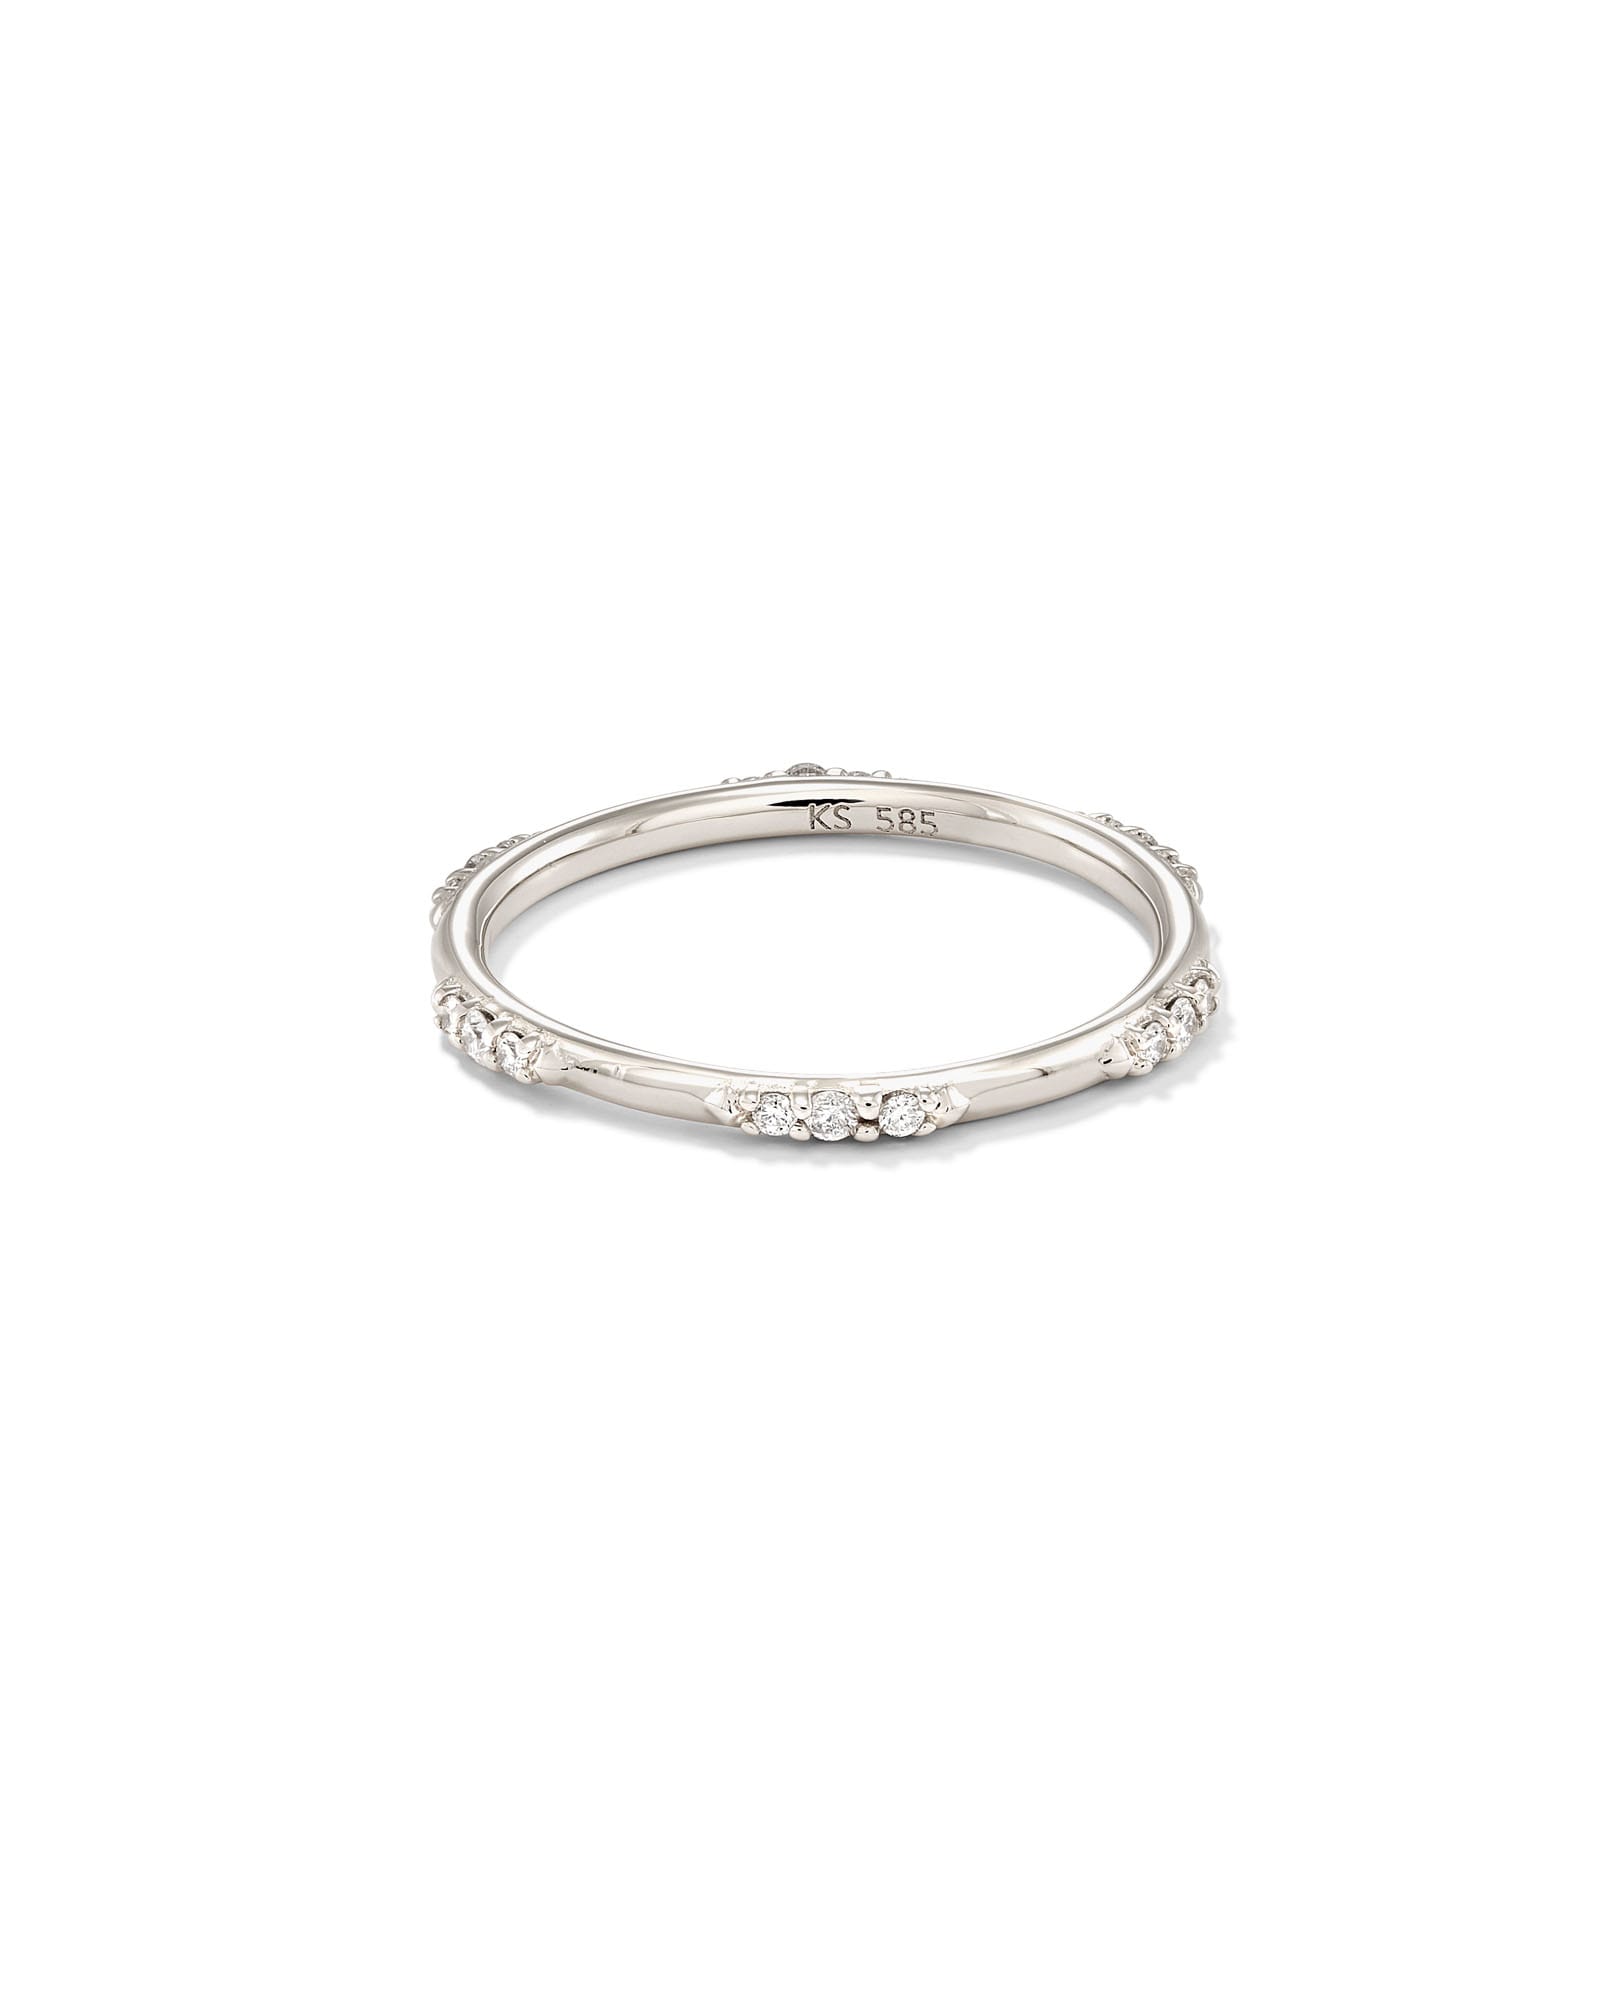 Kendra Scott Posey 14k White Gold Band Ring in White | Diamonds